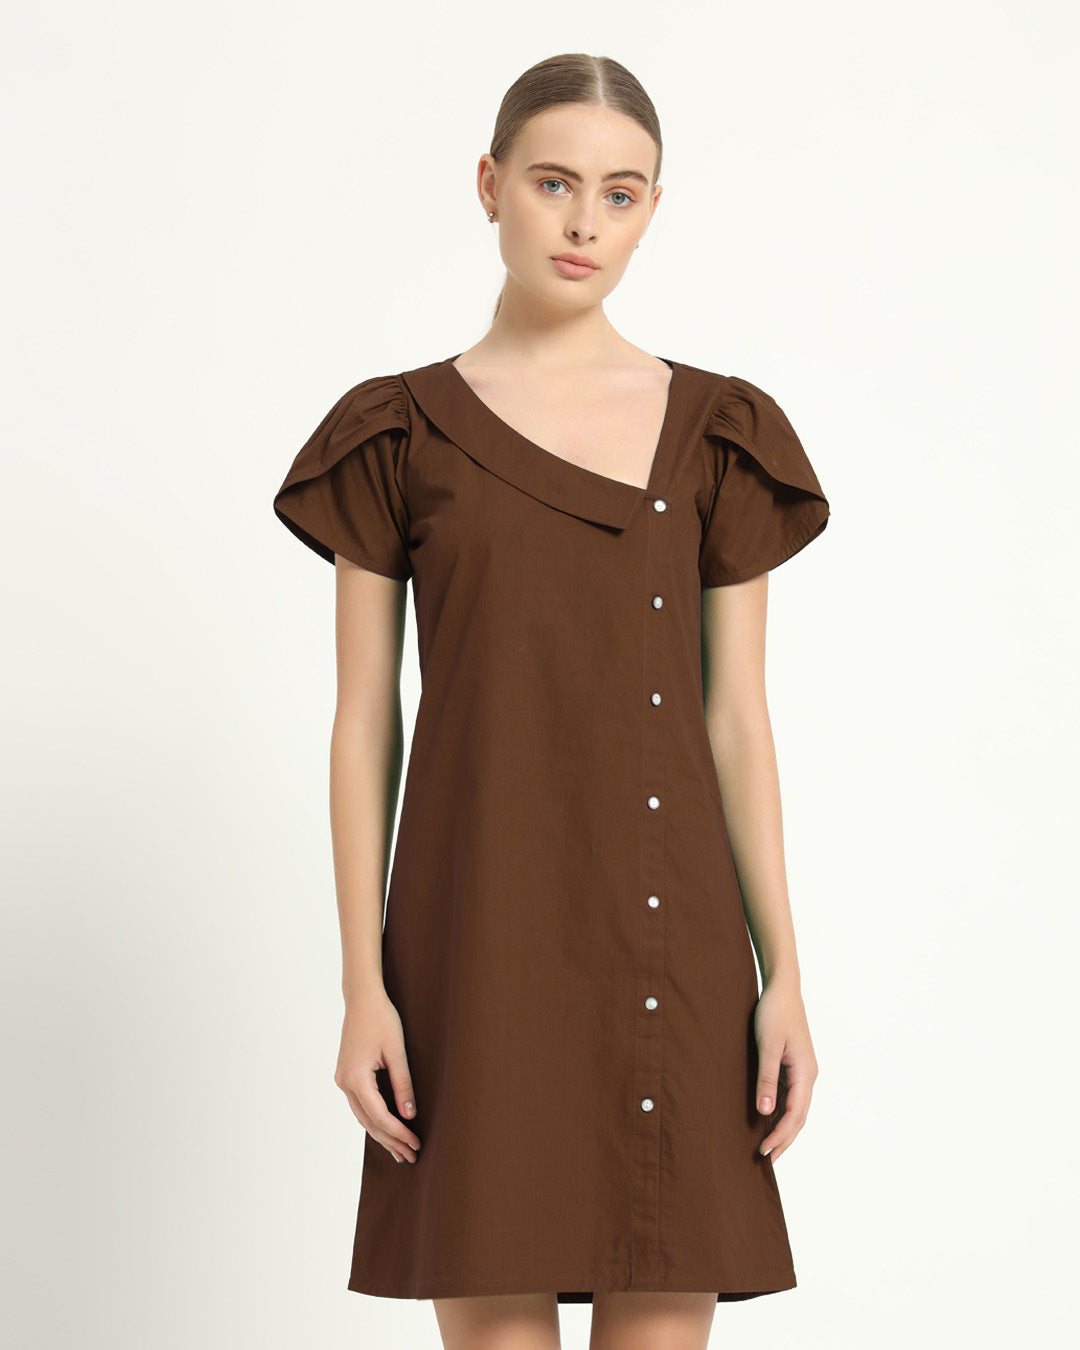 The Krensdorf Nutshell Cotton Dress